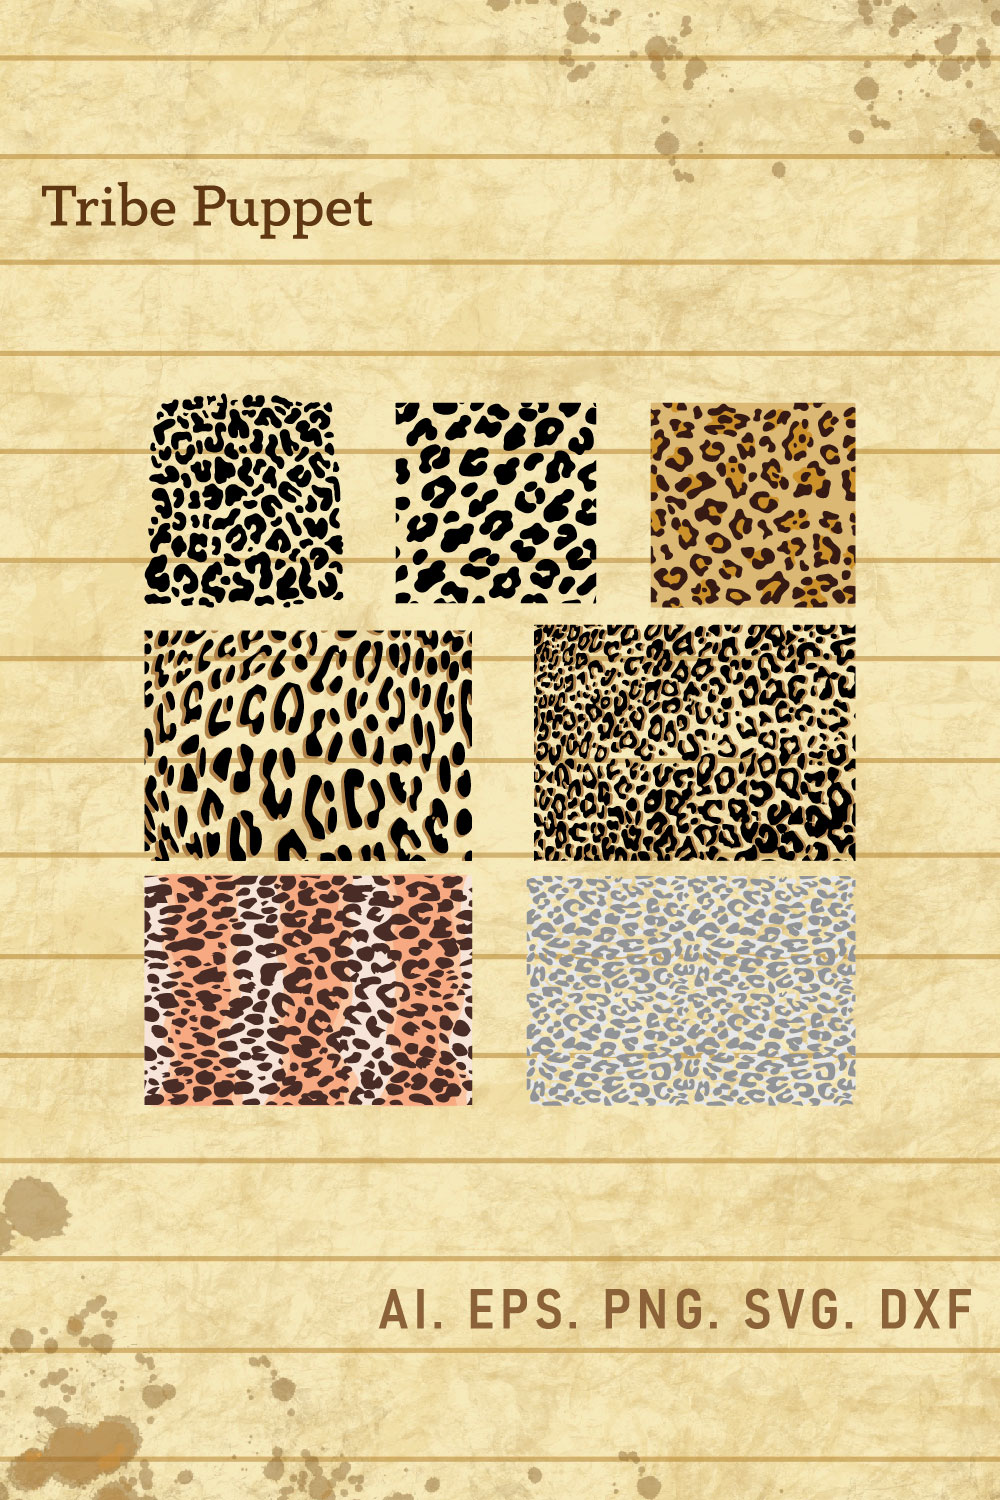 Leopard Print Pattern SVG pinterest preview image.